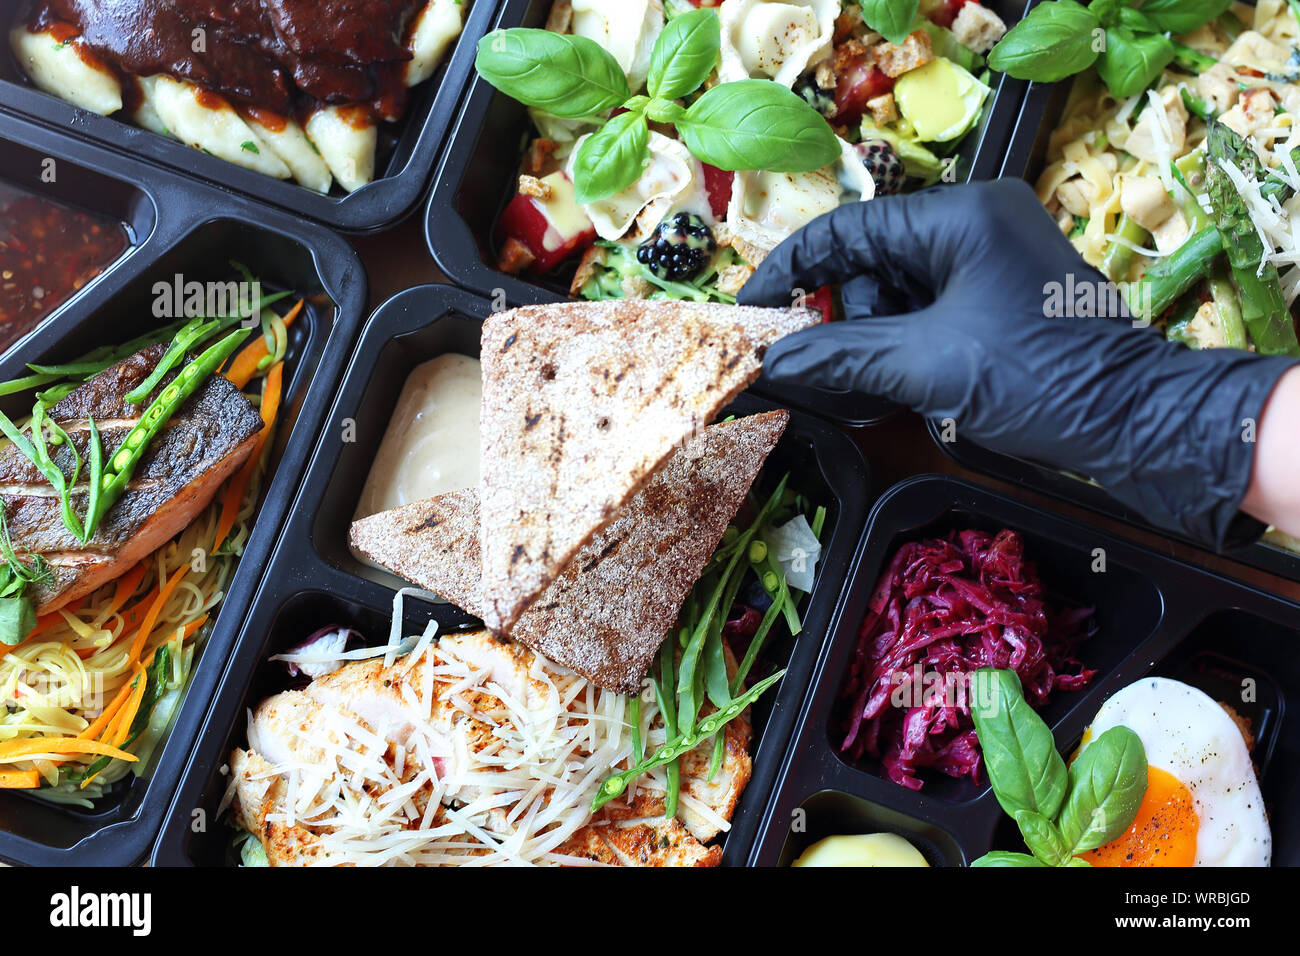 https://c8.alamy.com/comp/WRBJGD/meal-prep-appetizing-lunch-boxes-a-balanced-healthy-diet-WRBJGD.jpg